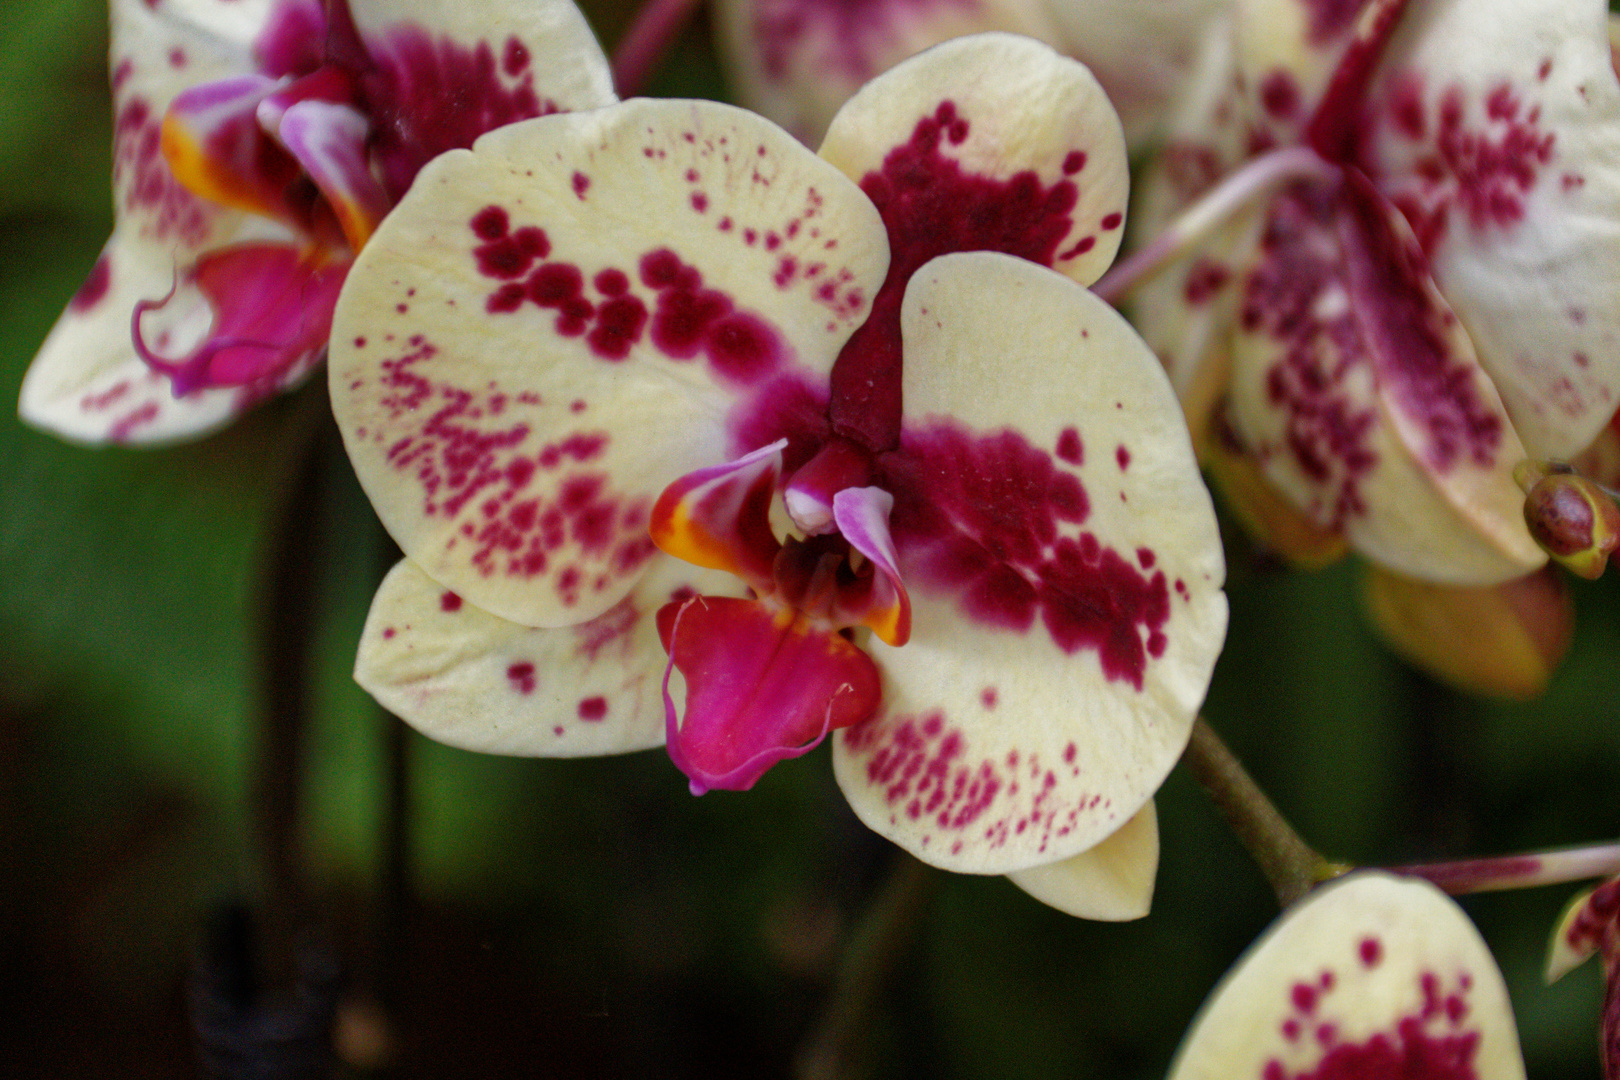 Lila Weiße Orchidee